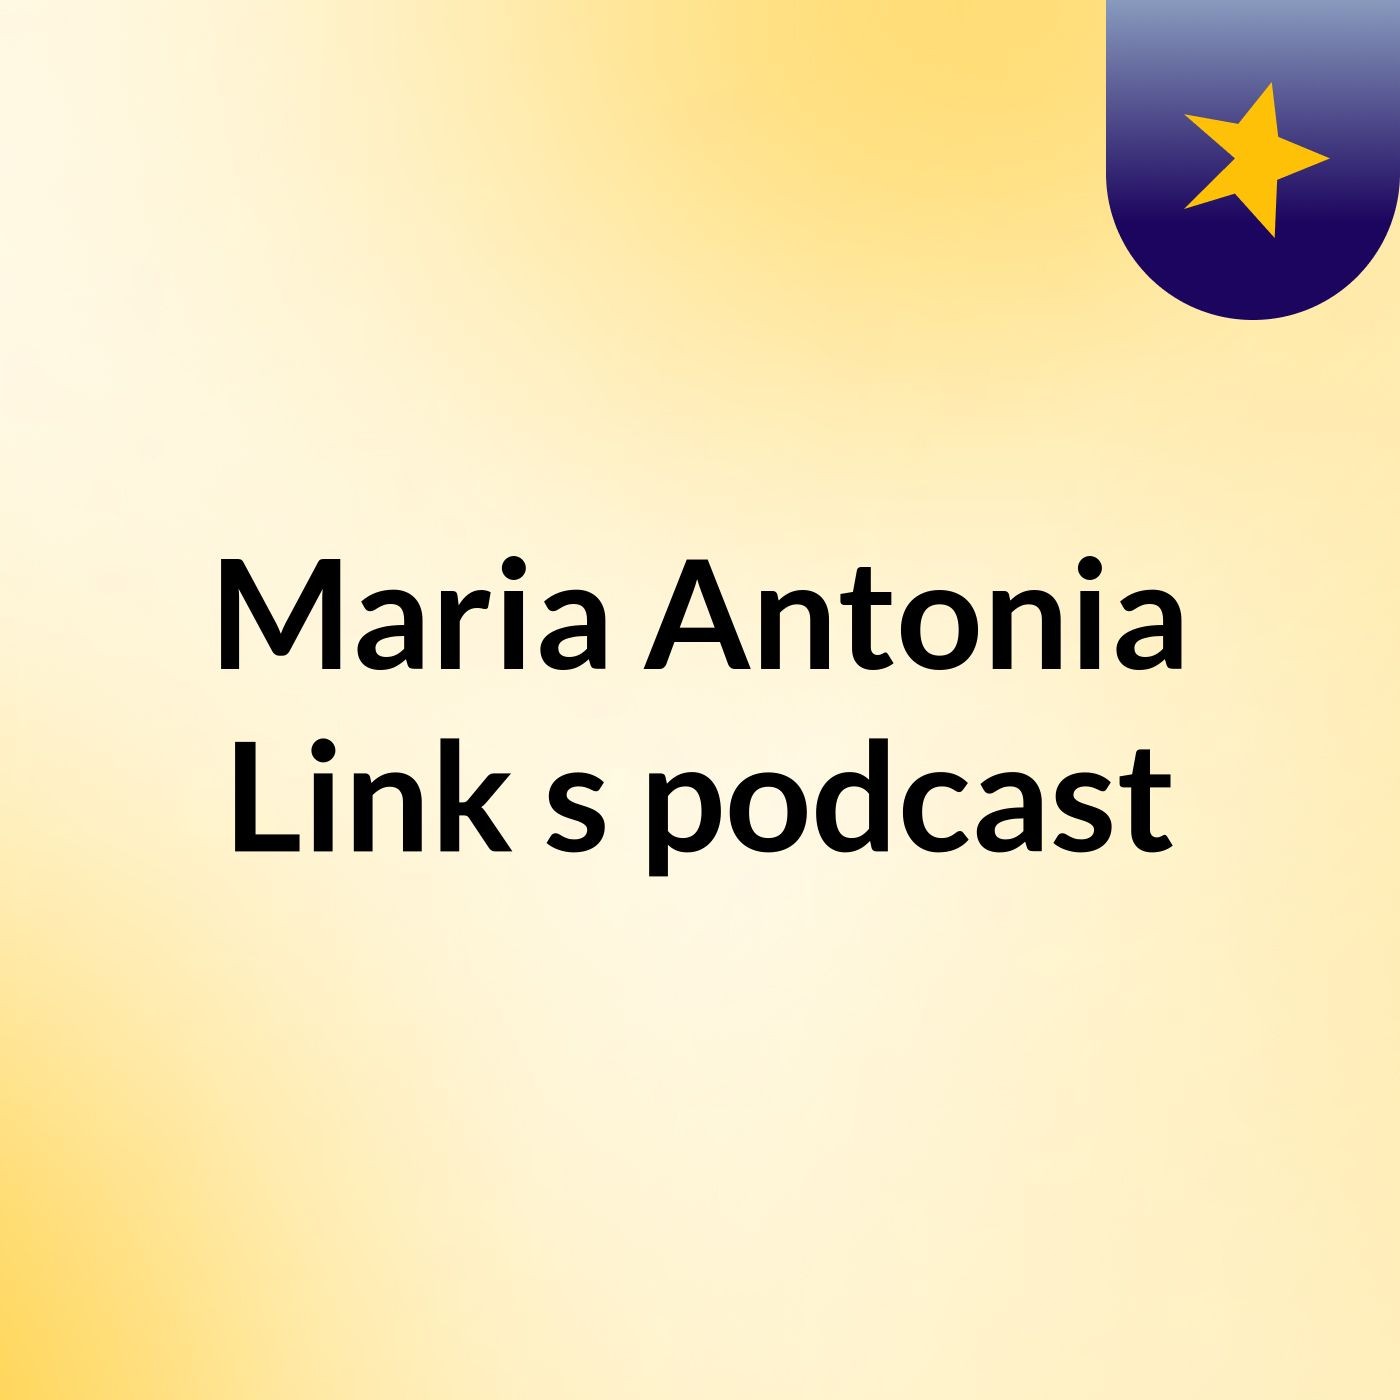 Maria Antonia Link's podcast